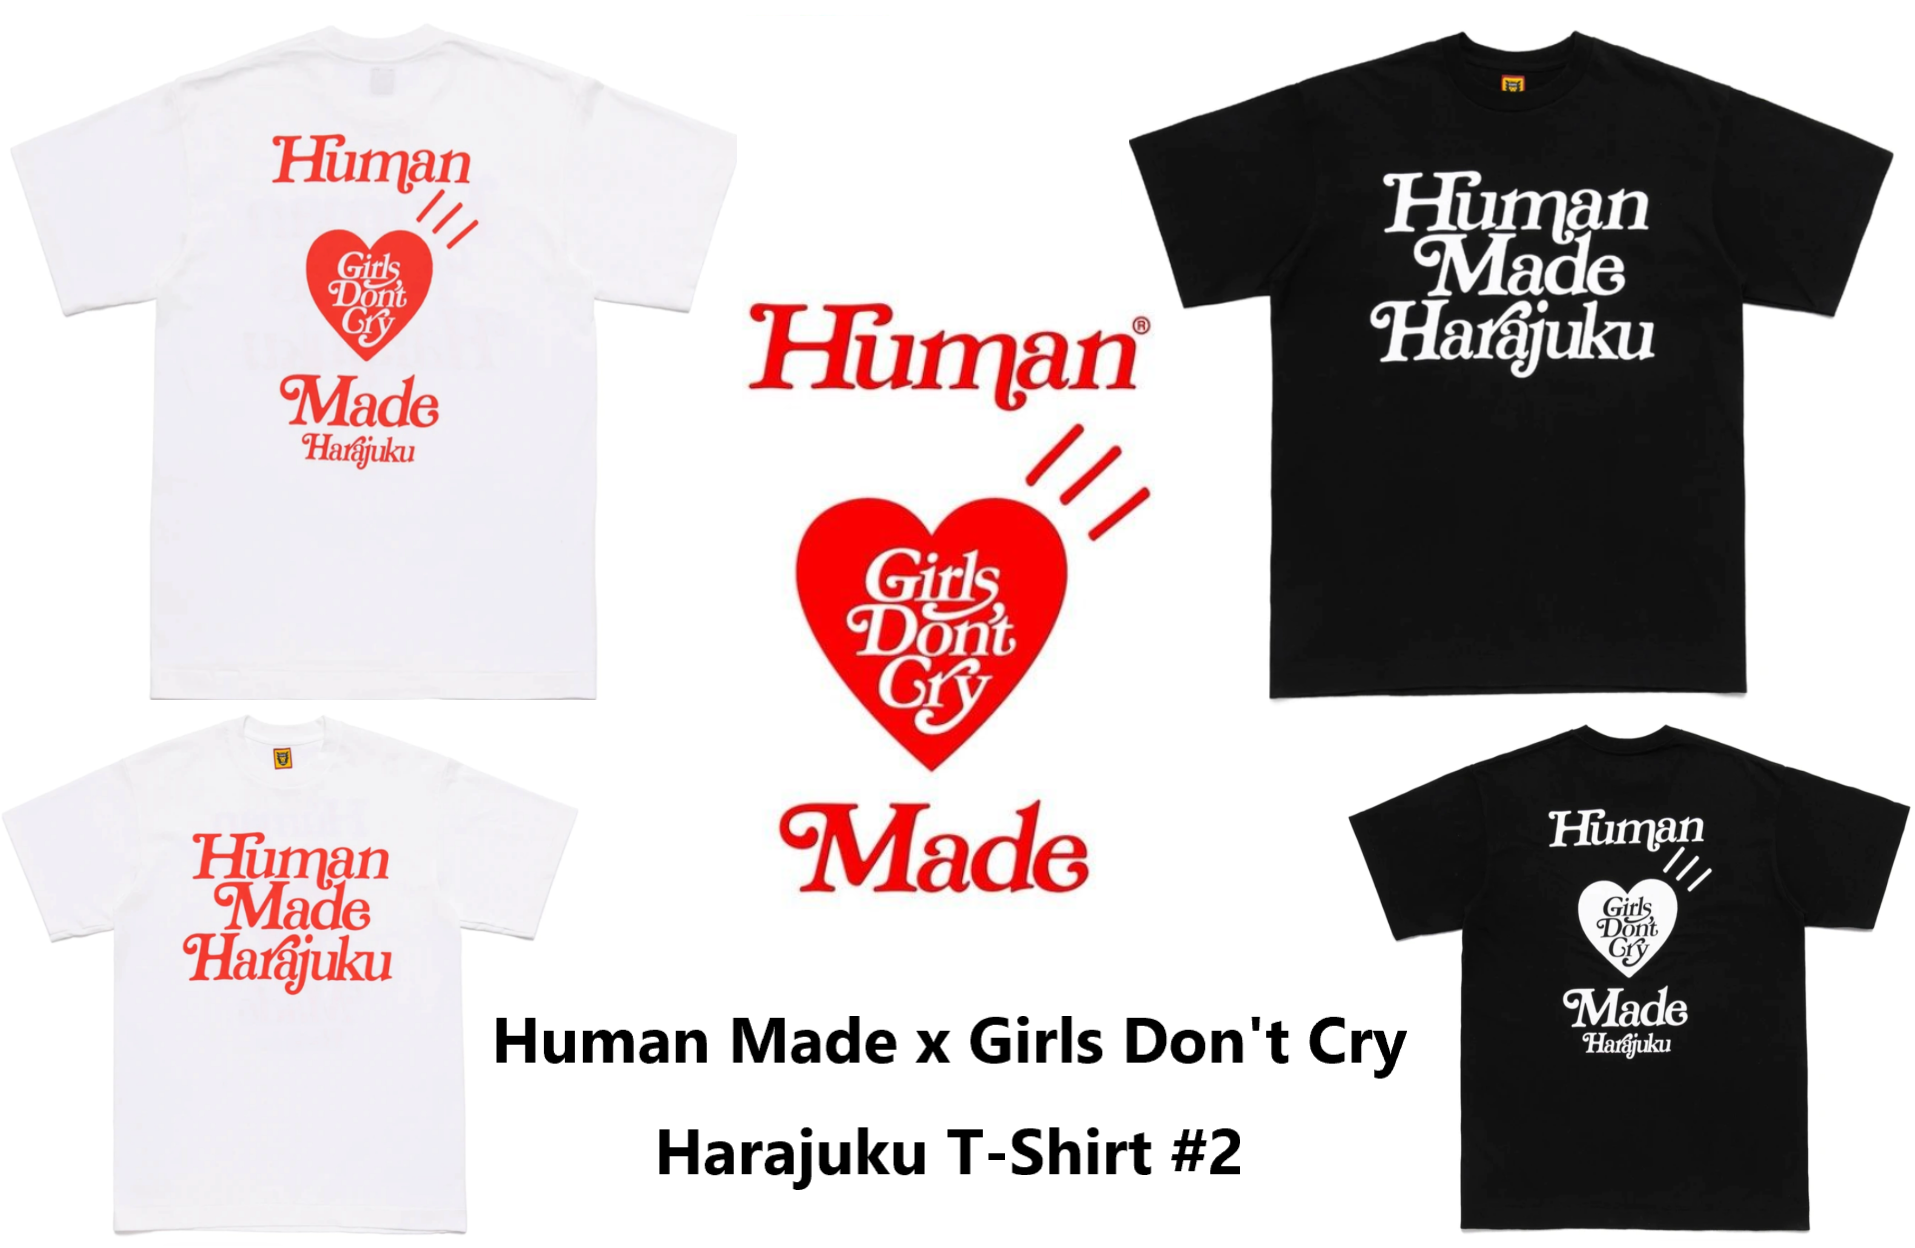 HUMAN MADE Girls Don't Cry Harajuku L 国産品 12750円 www.cjd.ma